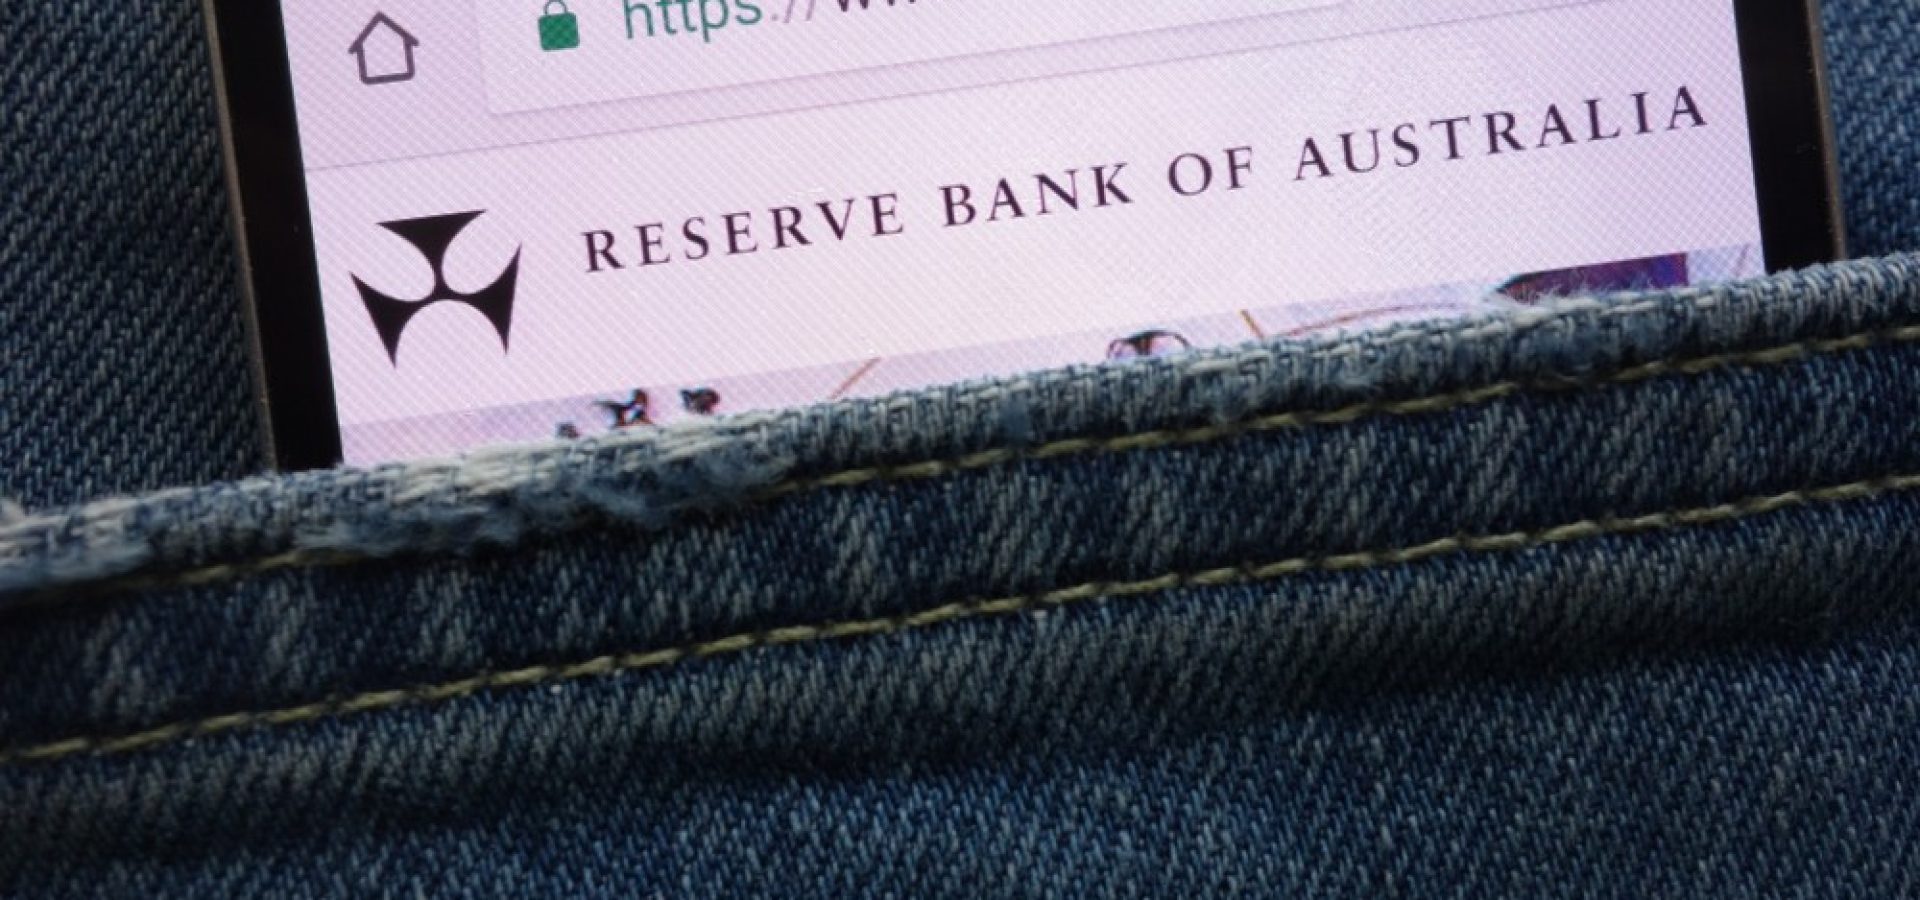 Reserve bank of australia (RBA) website on a smartphone